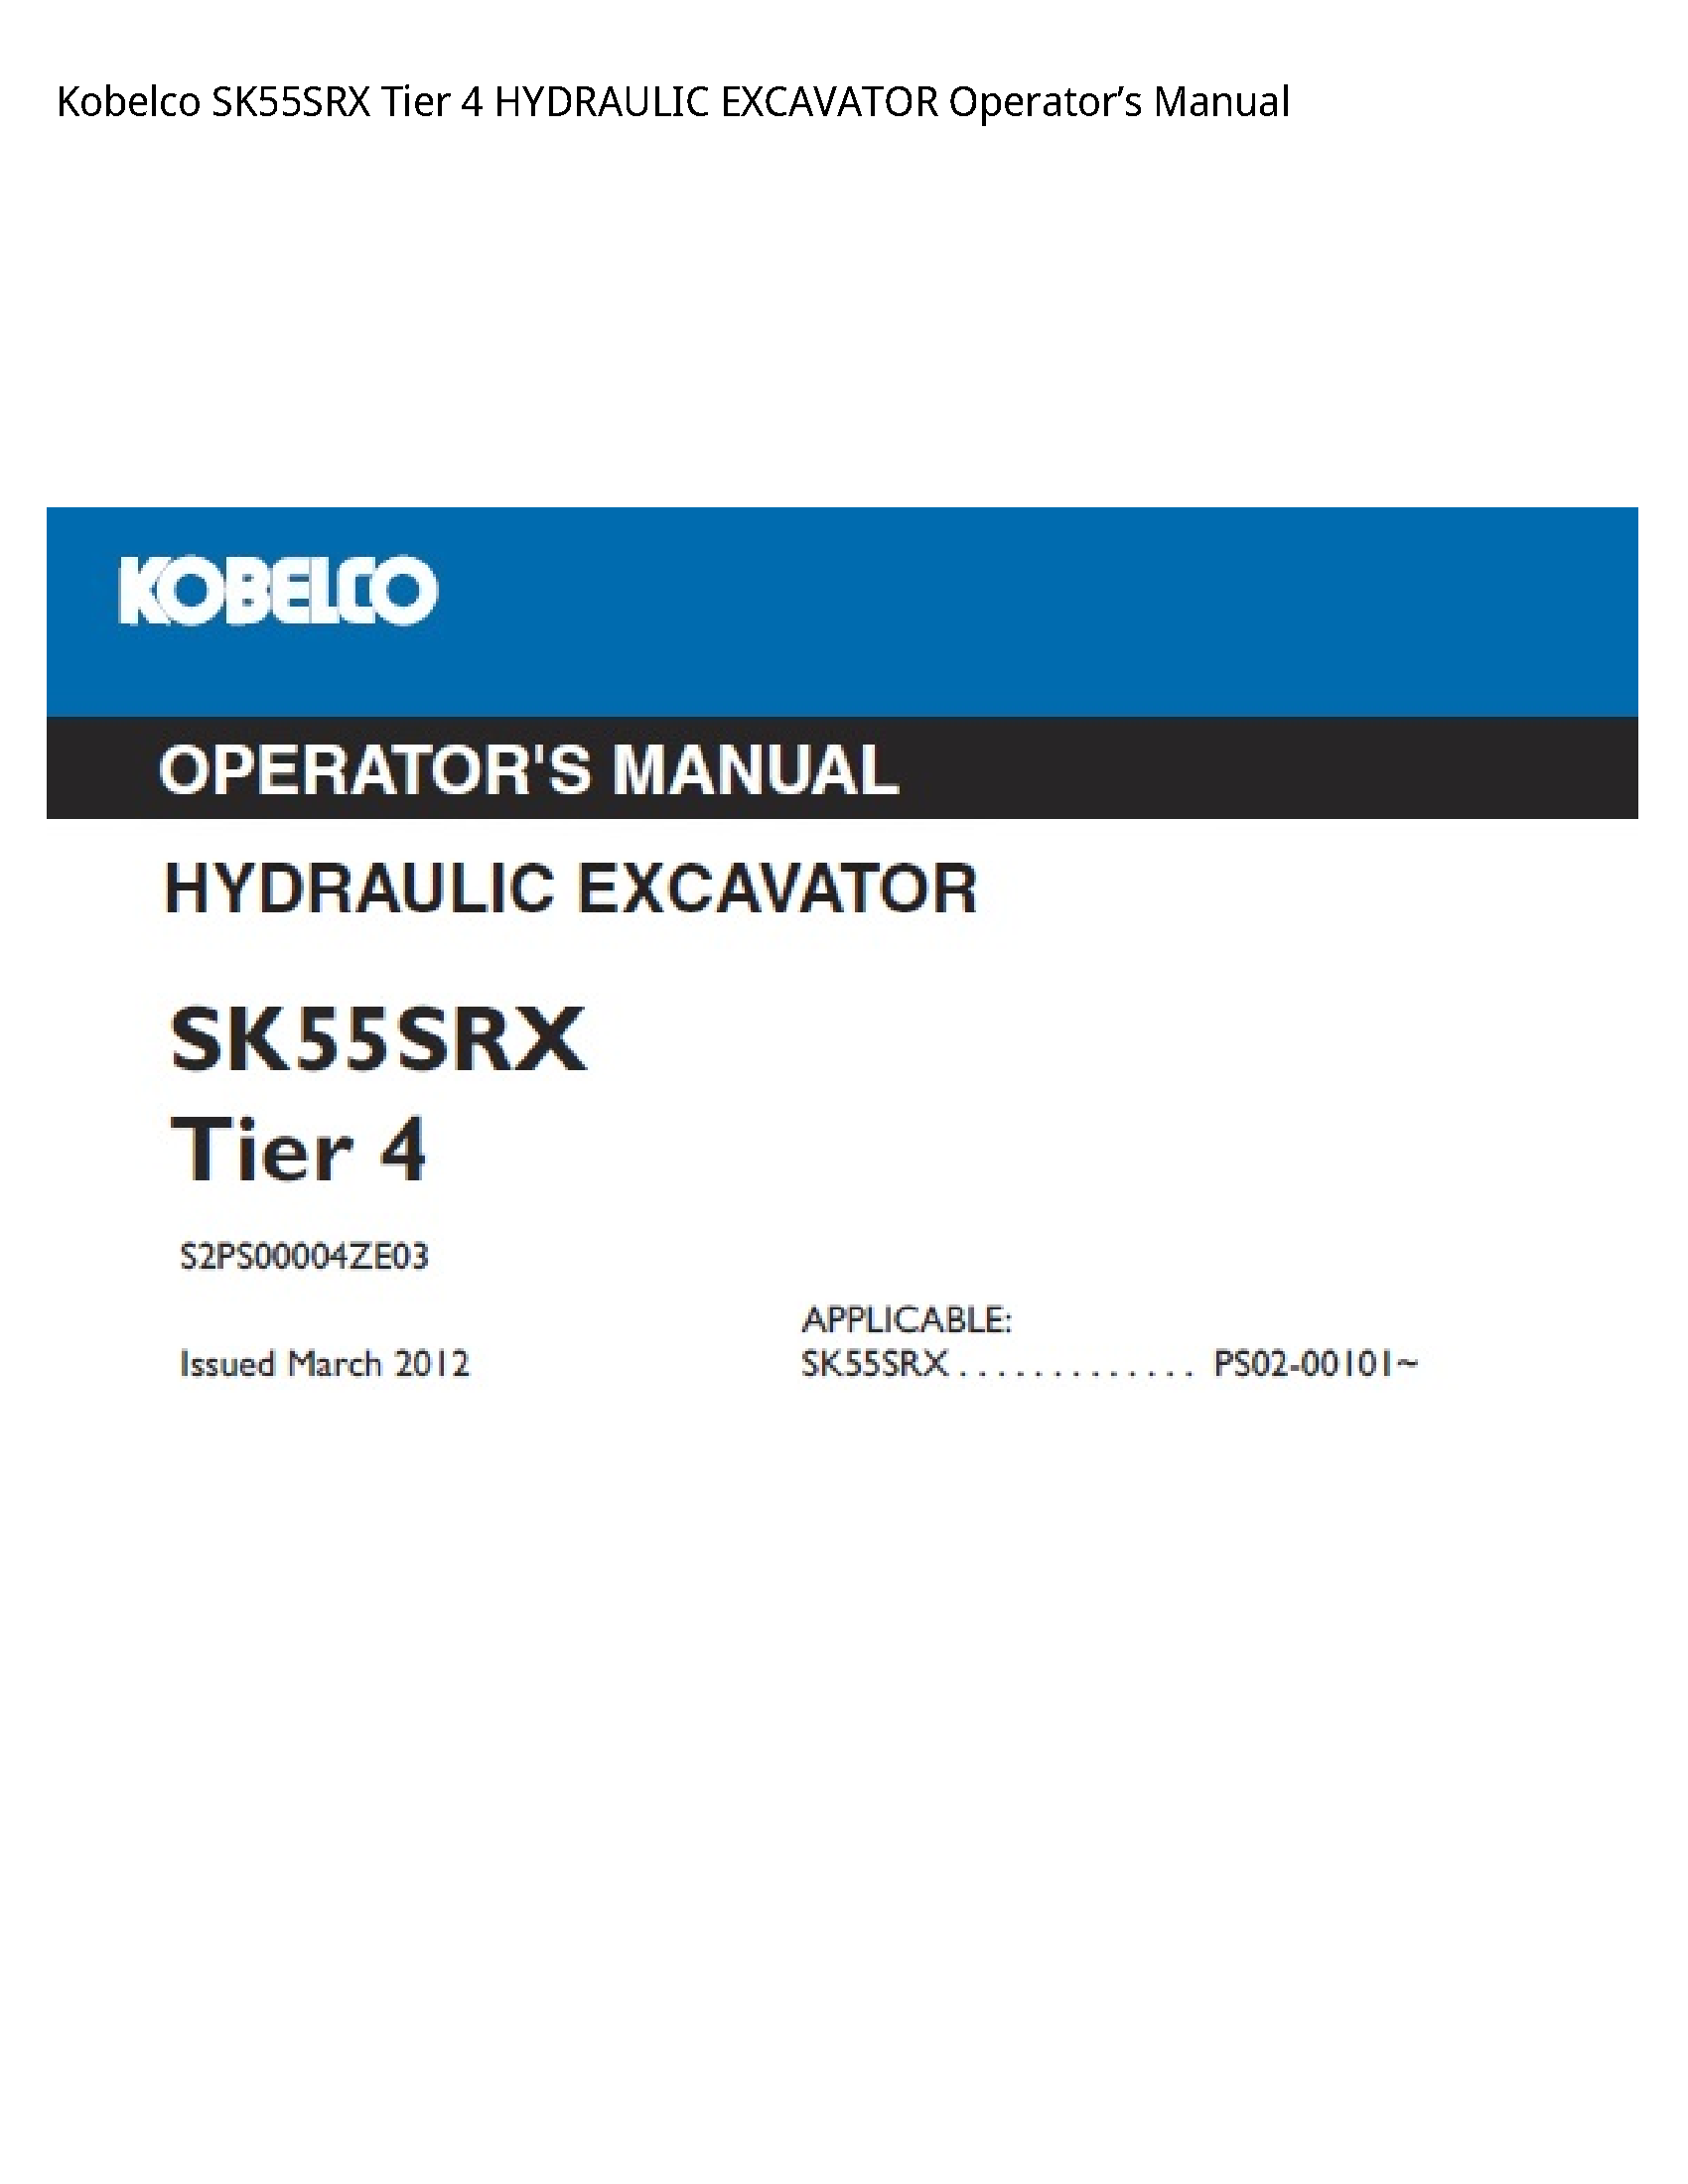 Kobelco SK55SRX Tier HYDRAULIC EXCAVATOR Operator’s manual